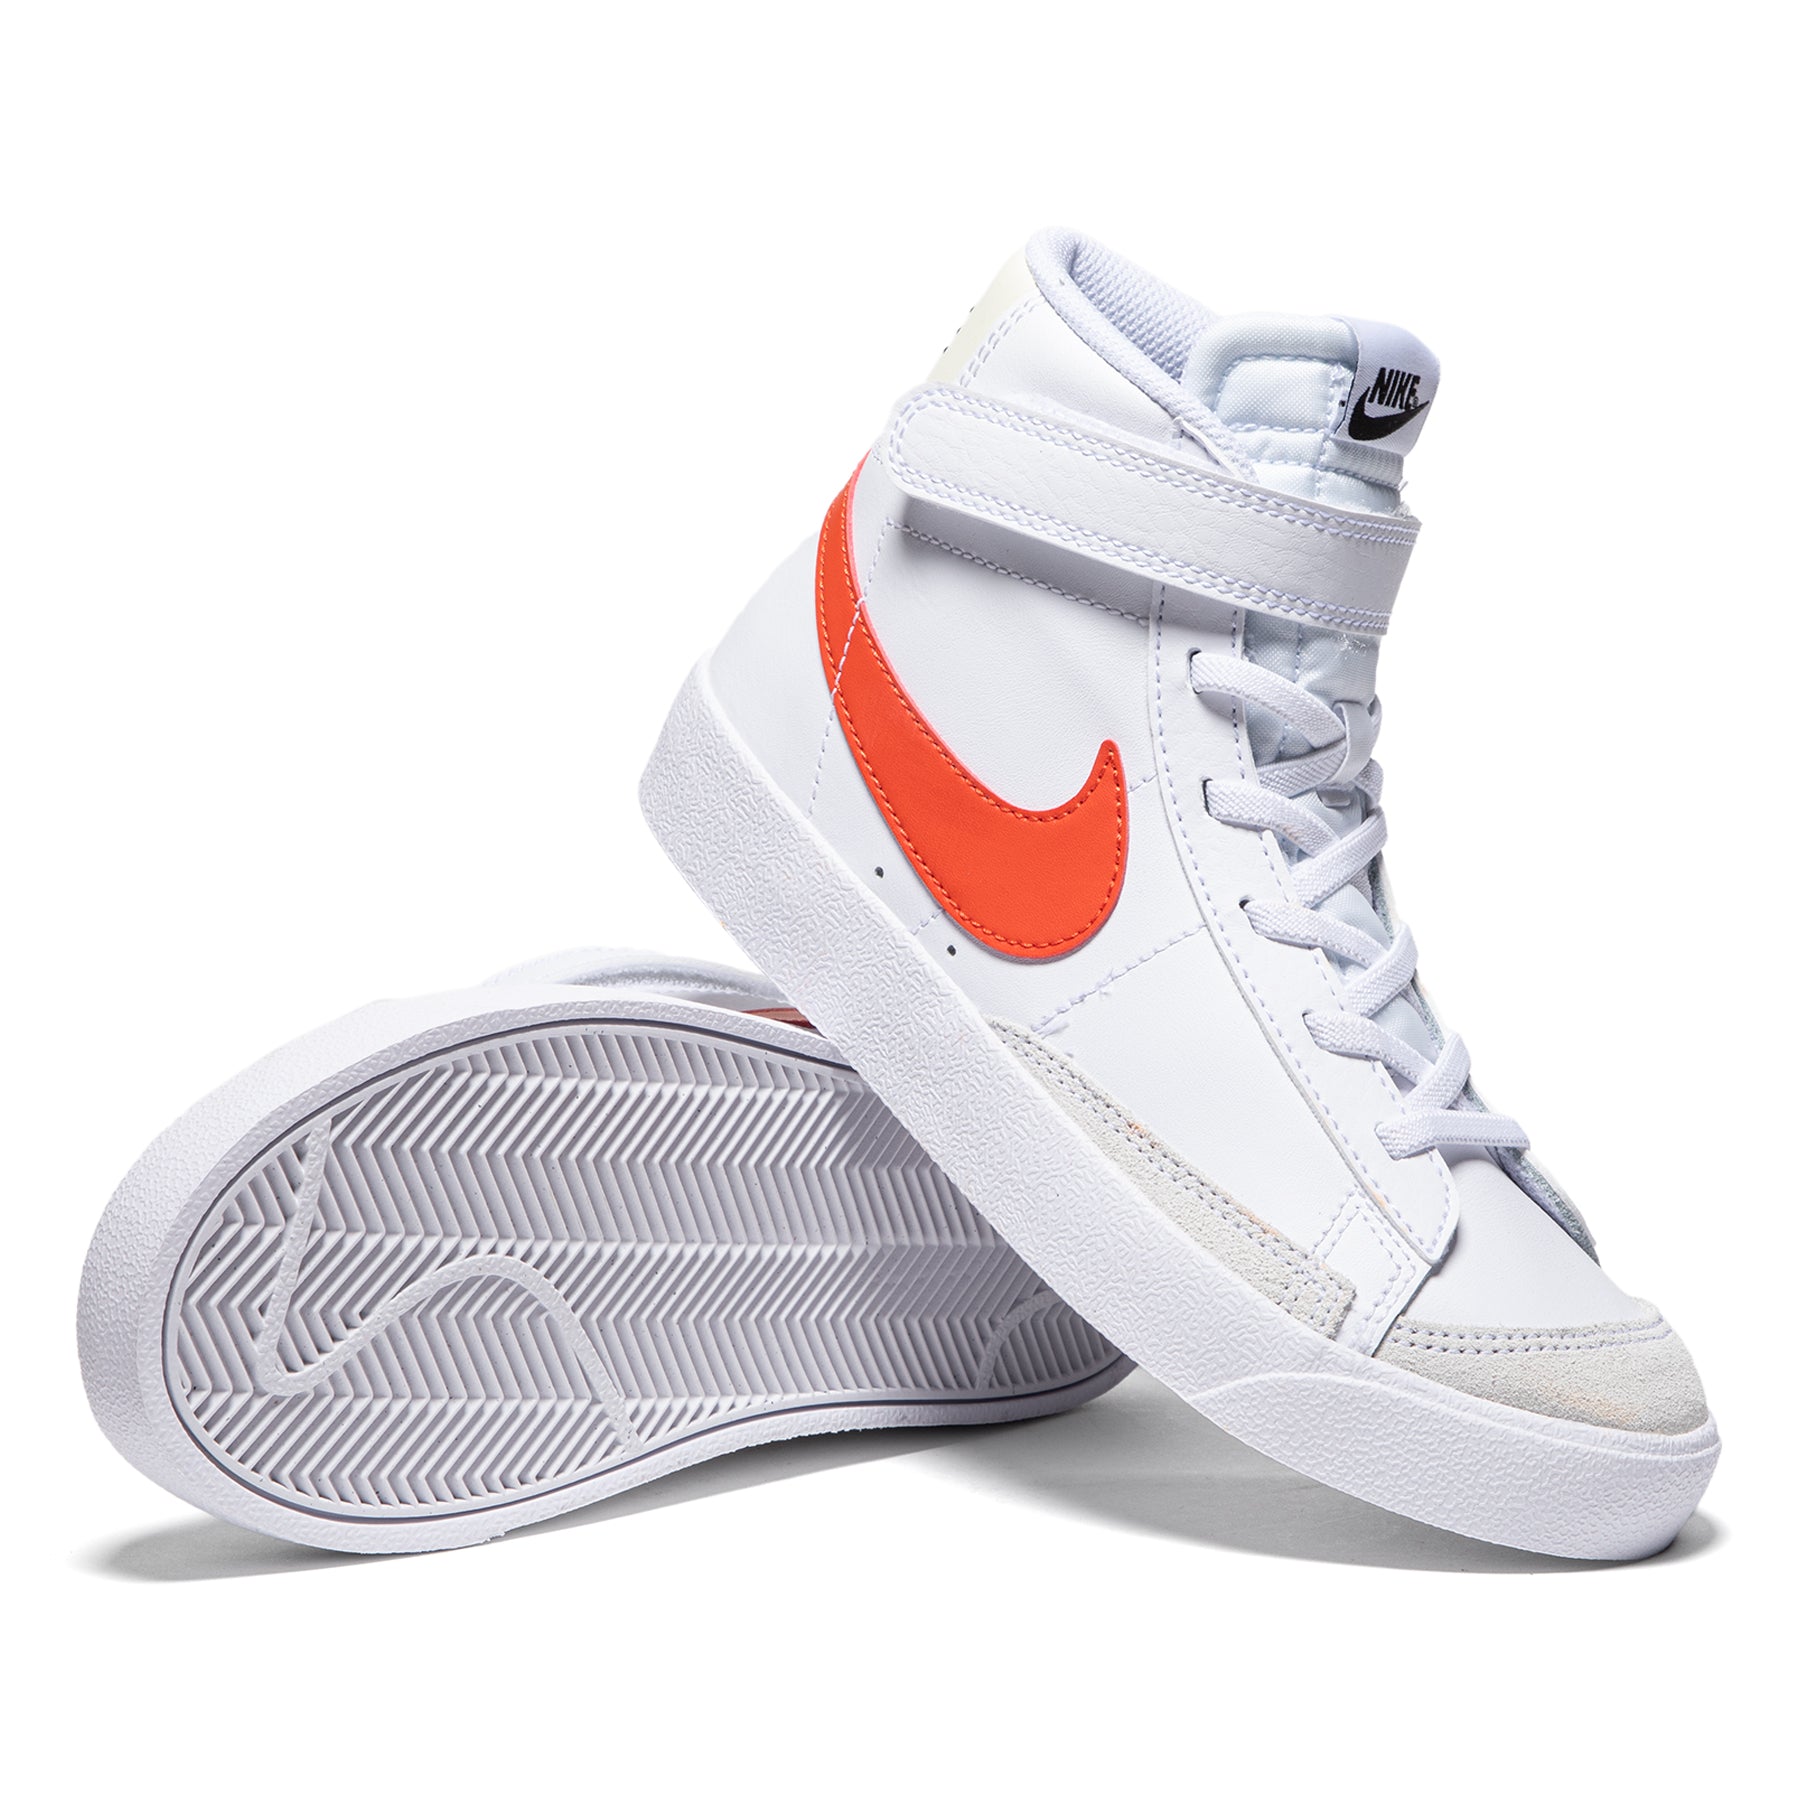 Medias Nike Classic II naranjas